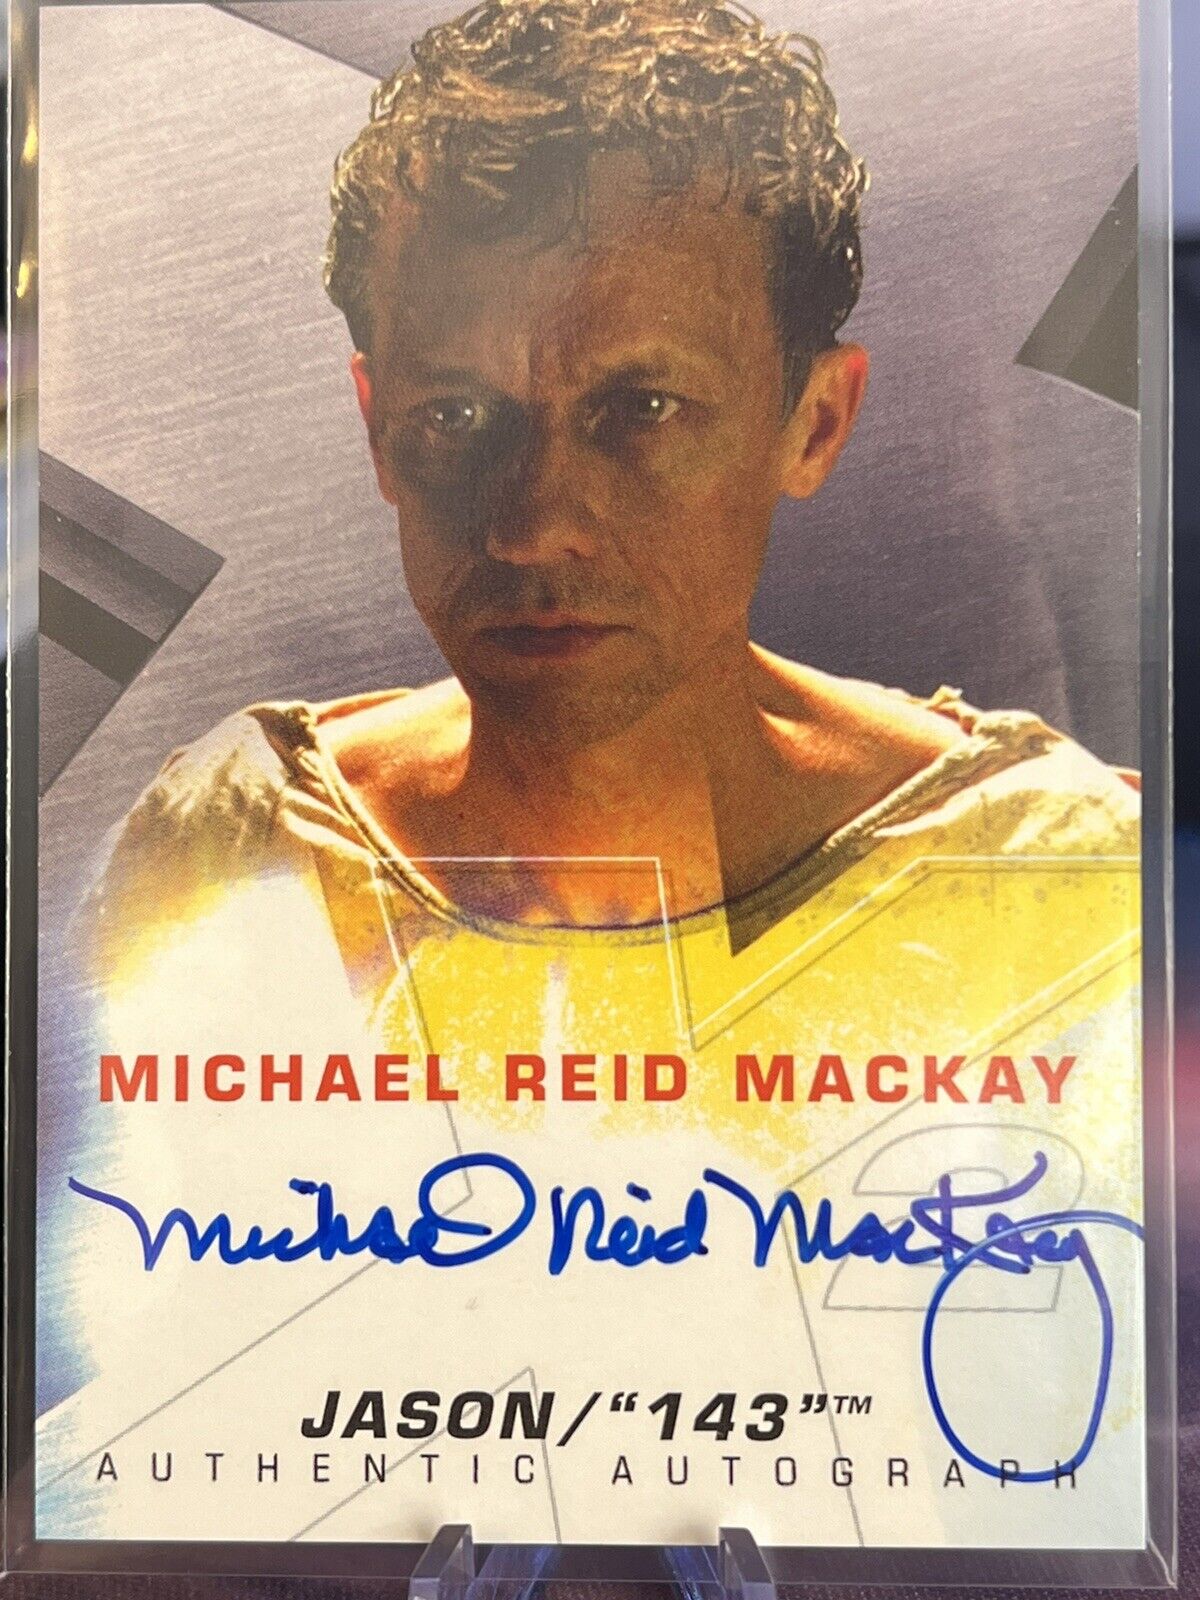 2003 Topps X-Men 2: United Michael Reid Mackay as Jason/143 Autograph Card